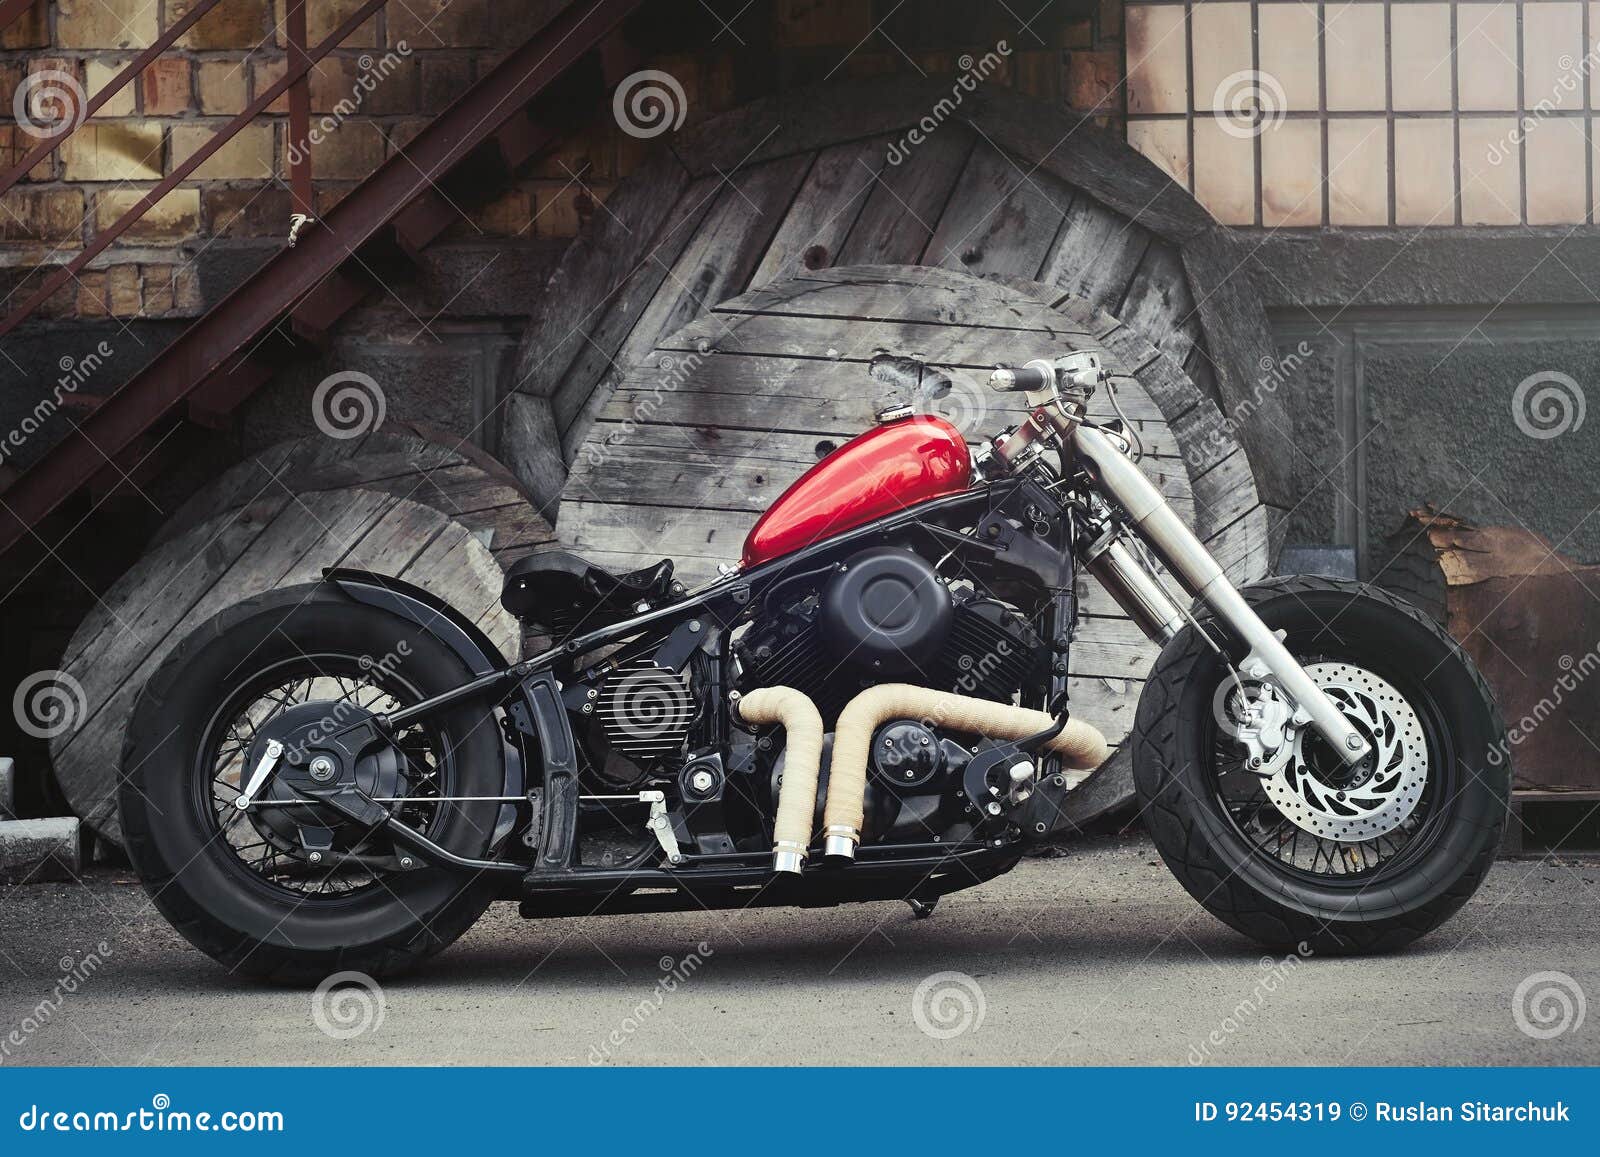 https://thumbs.dreamstime.com/z/black-vintage-custom-motorcycle-bobber-industrial-background-view-side-92454319.jpg